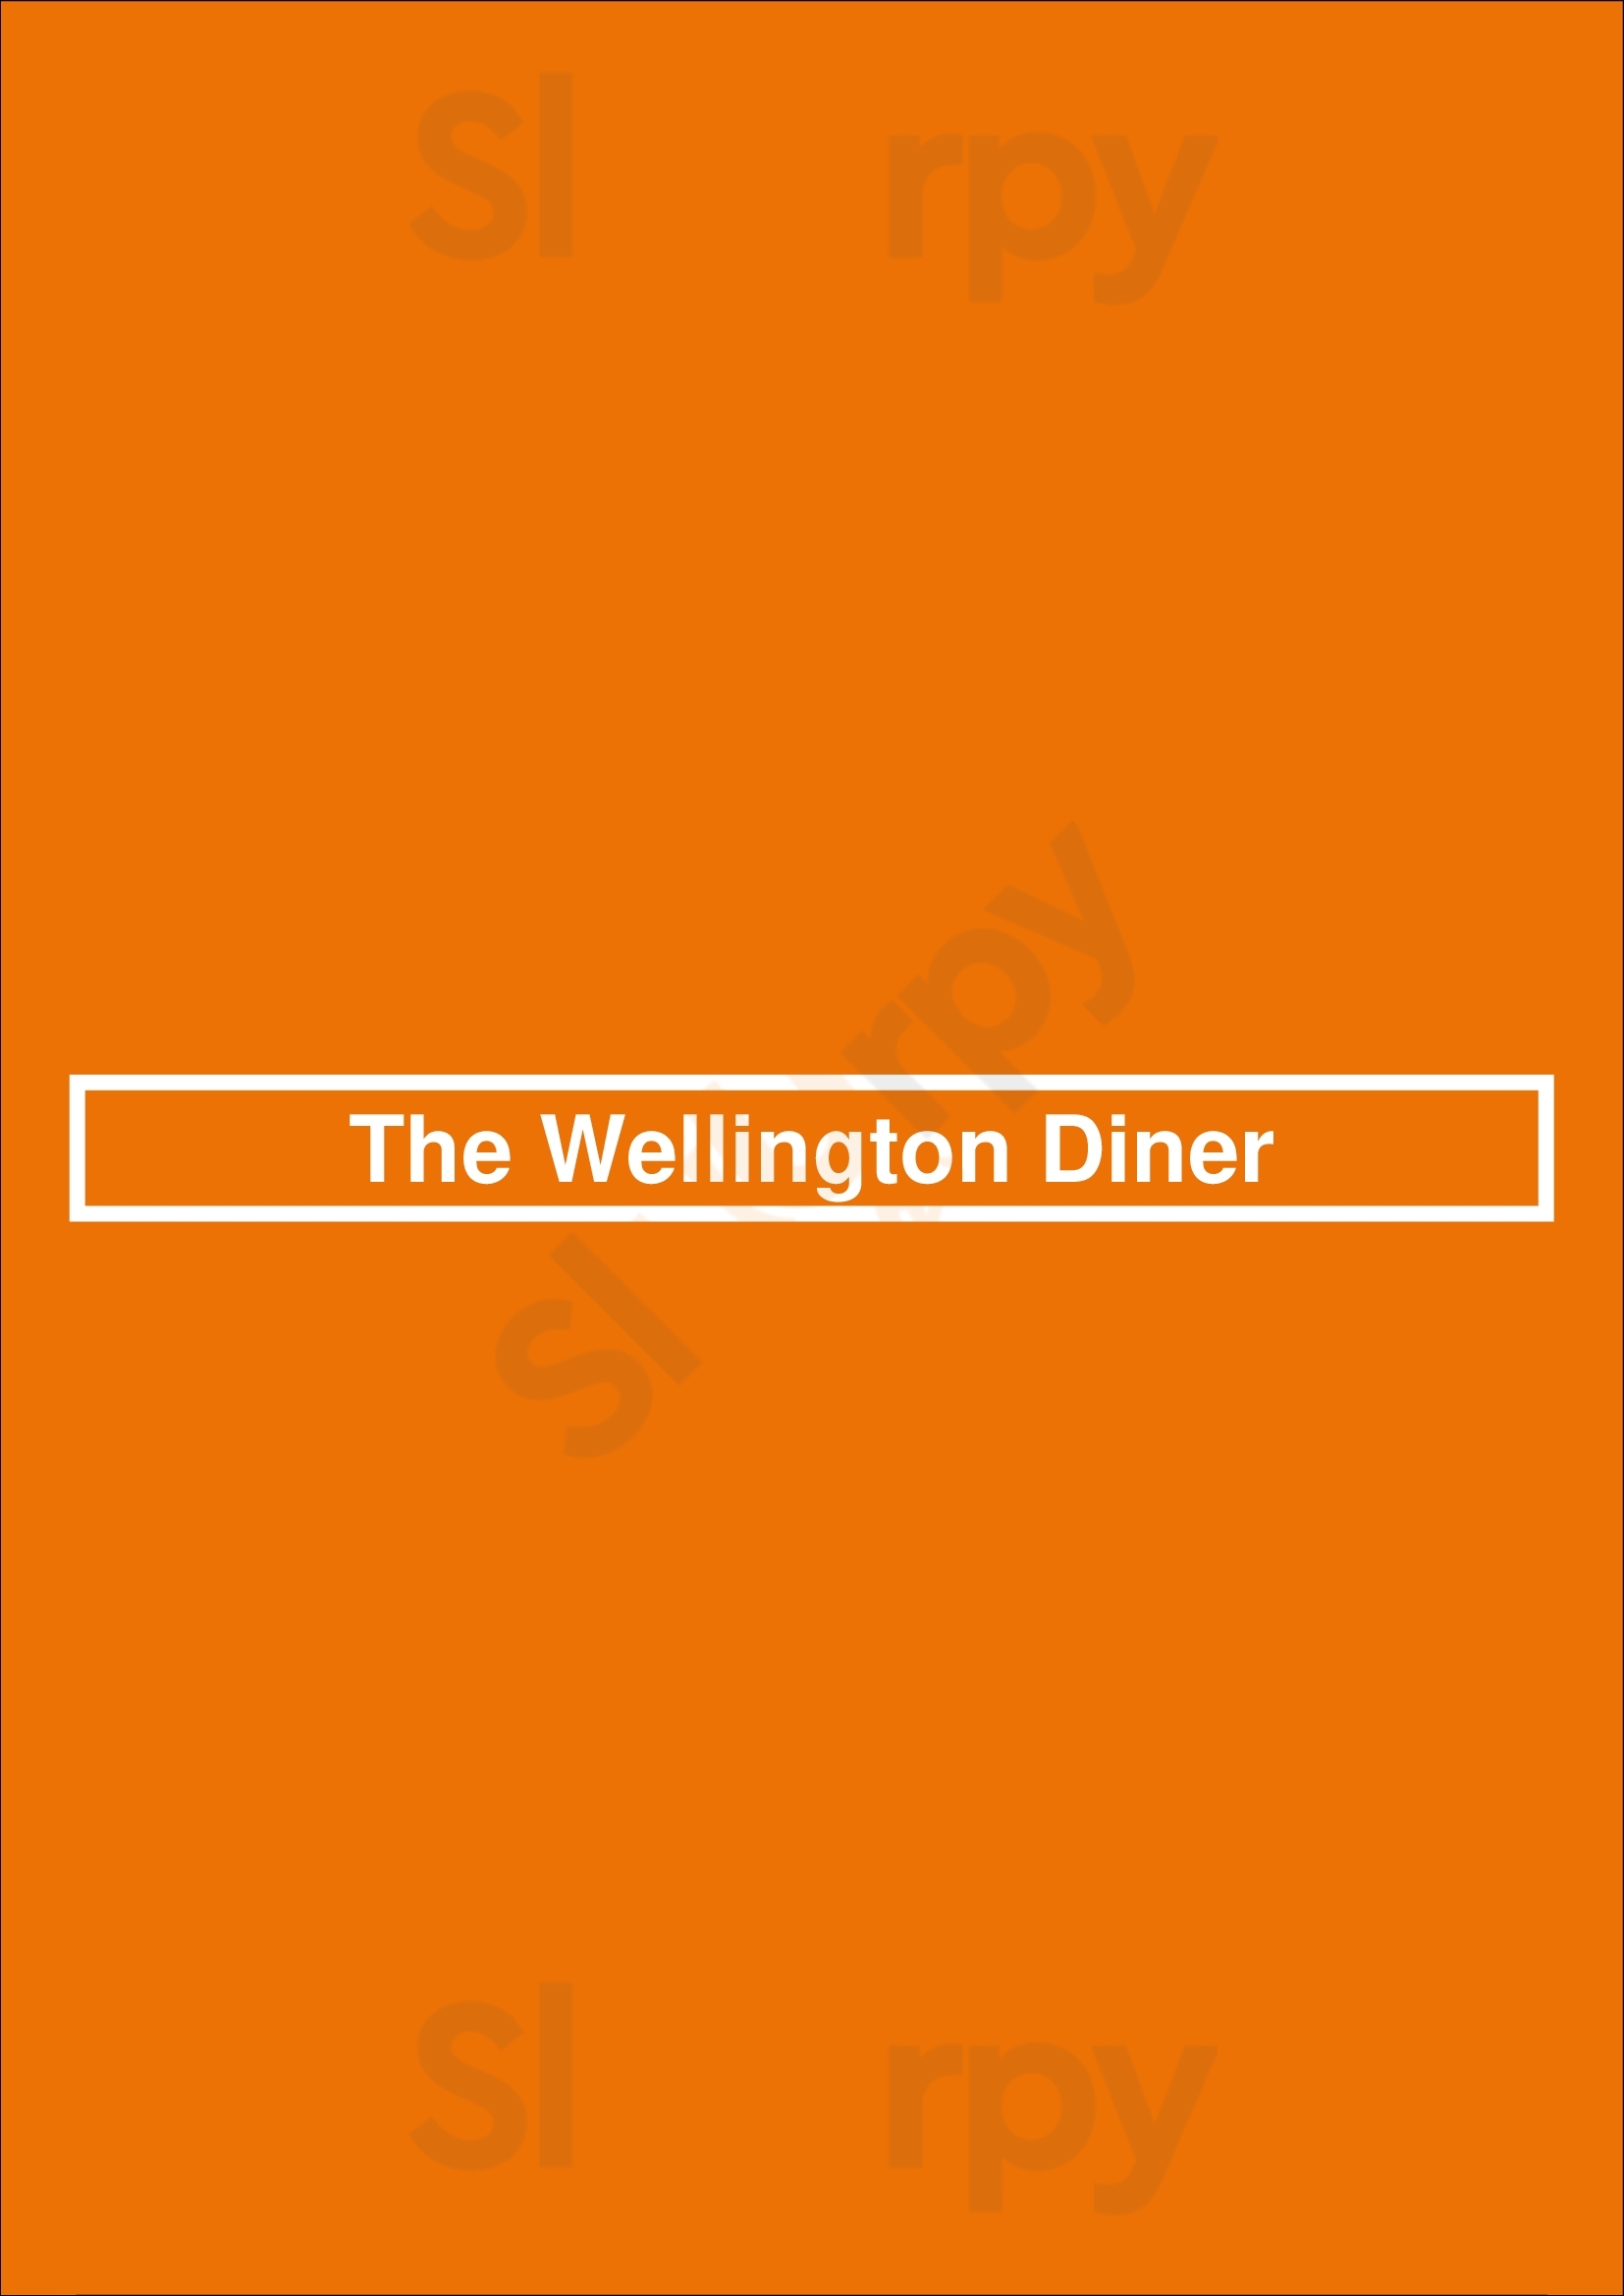 The Wellington Diner Ottawa Menu - 1